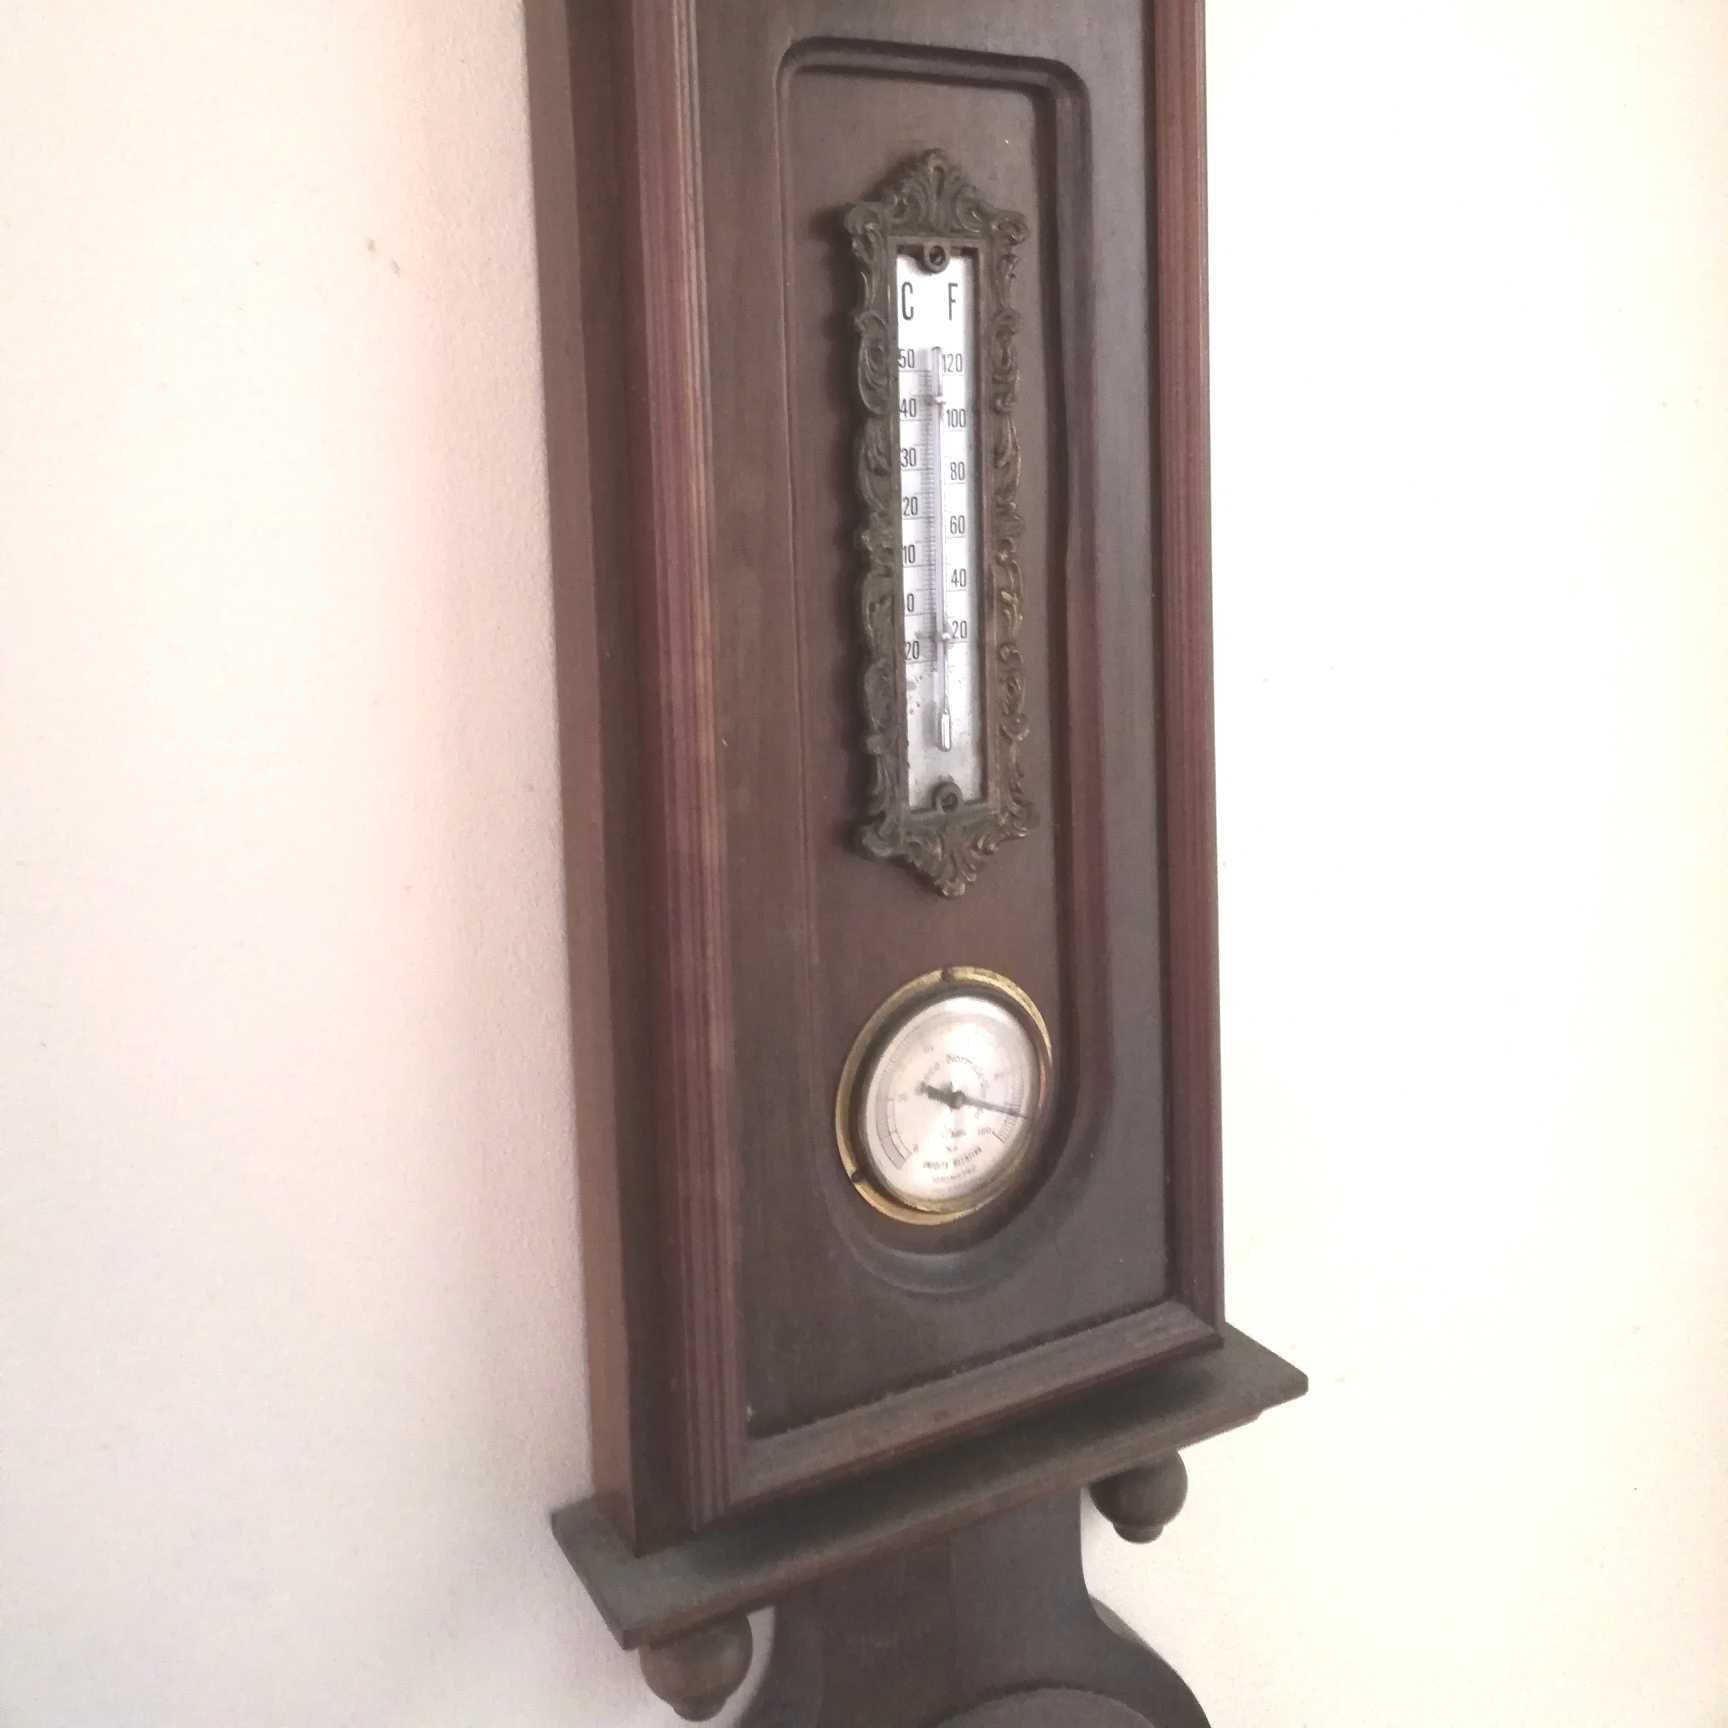 Relógio de parede Kienzle, de 1971